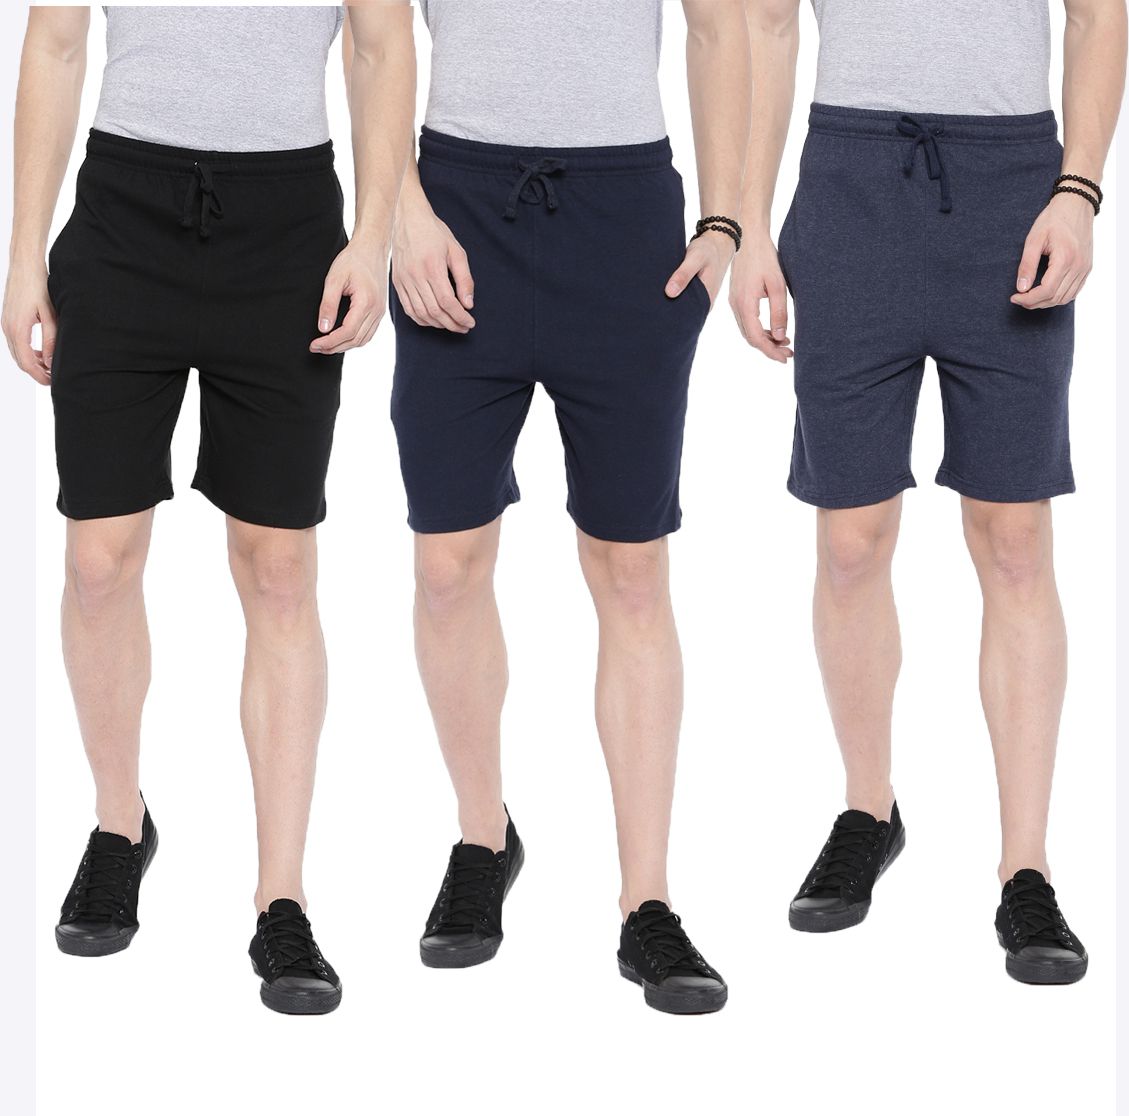 MANLINO Multi Shorts - Buy MANLINO Multi Shorts Online at Low Price in ...